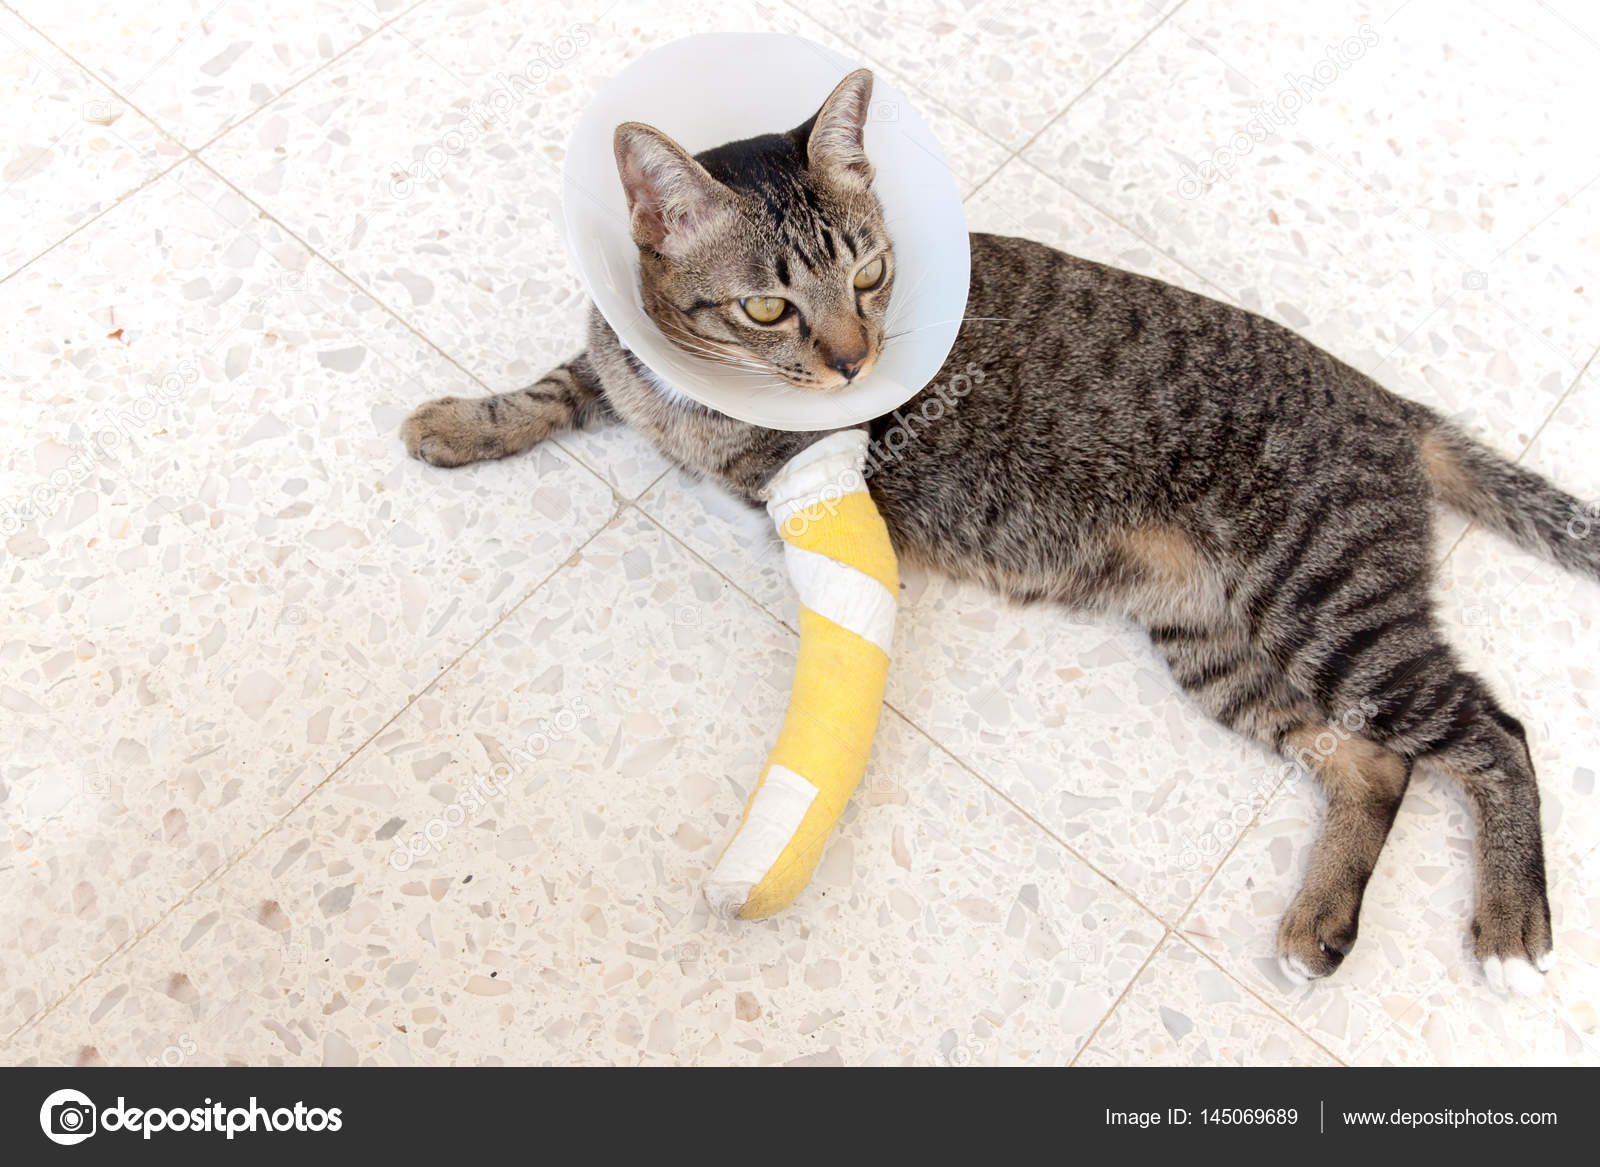 Broken leg splint cat — Stock Photo © PeachLoveU #145069689